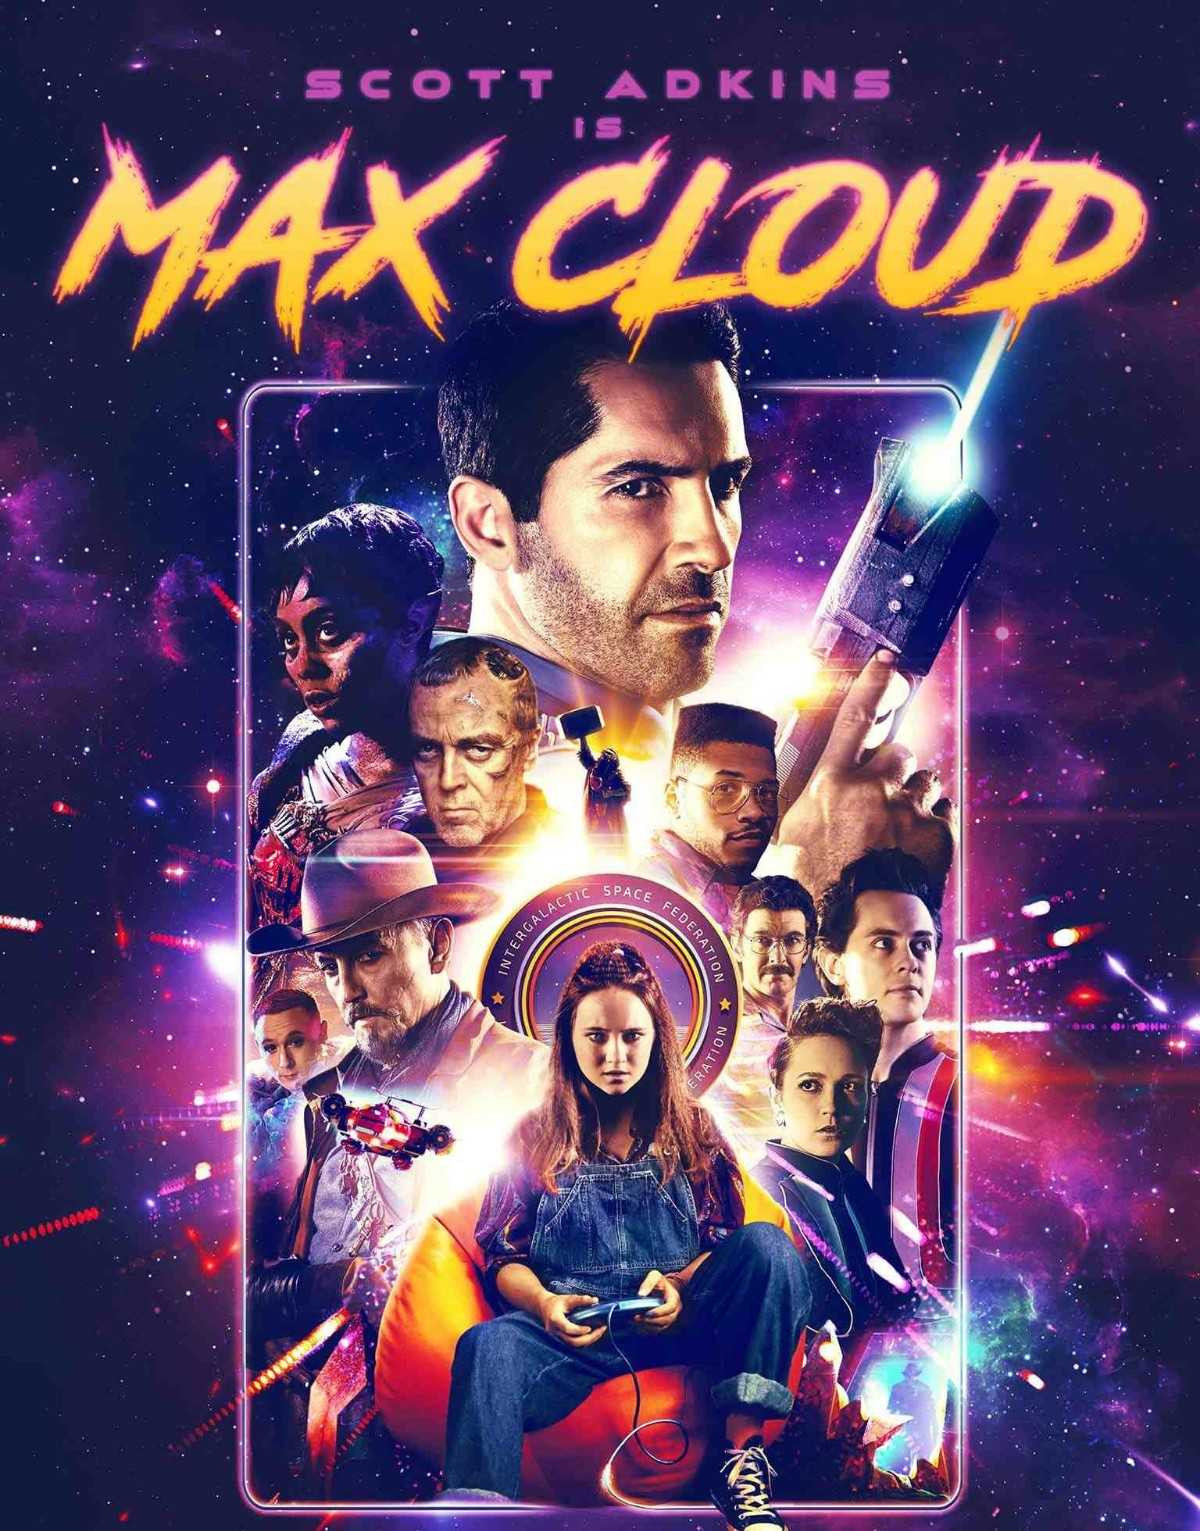 Max Cloud film konusu ne?